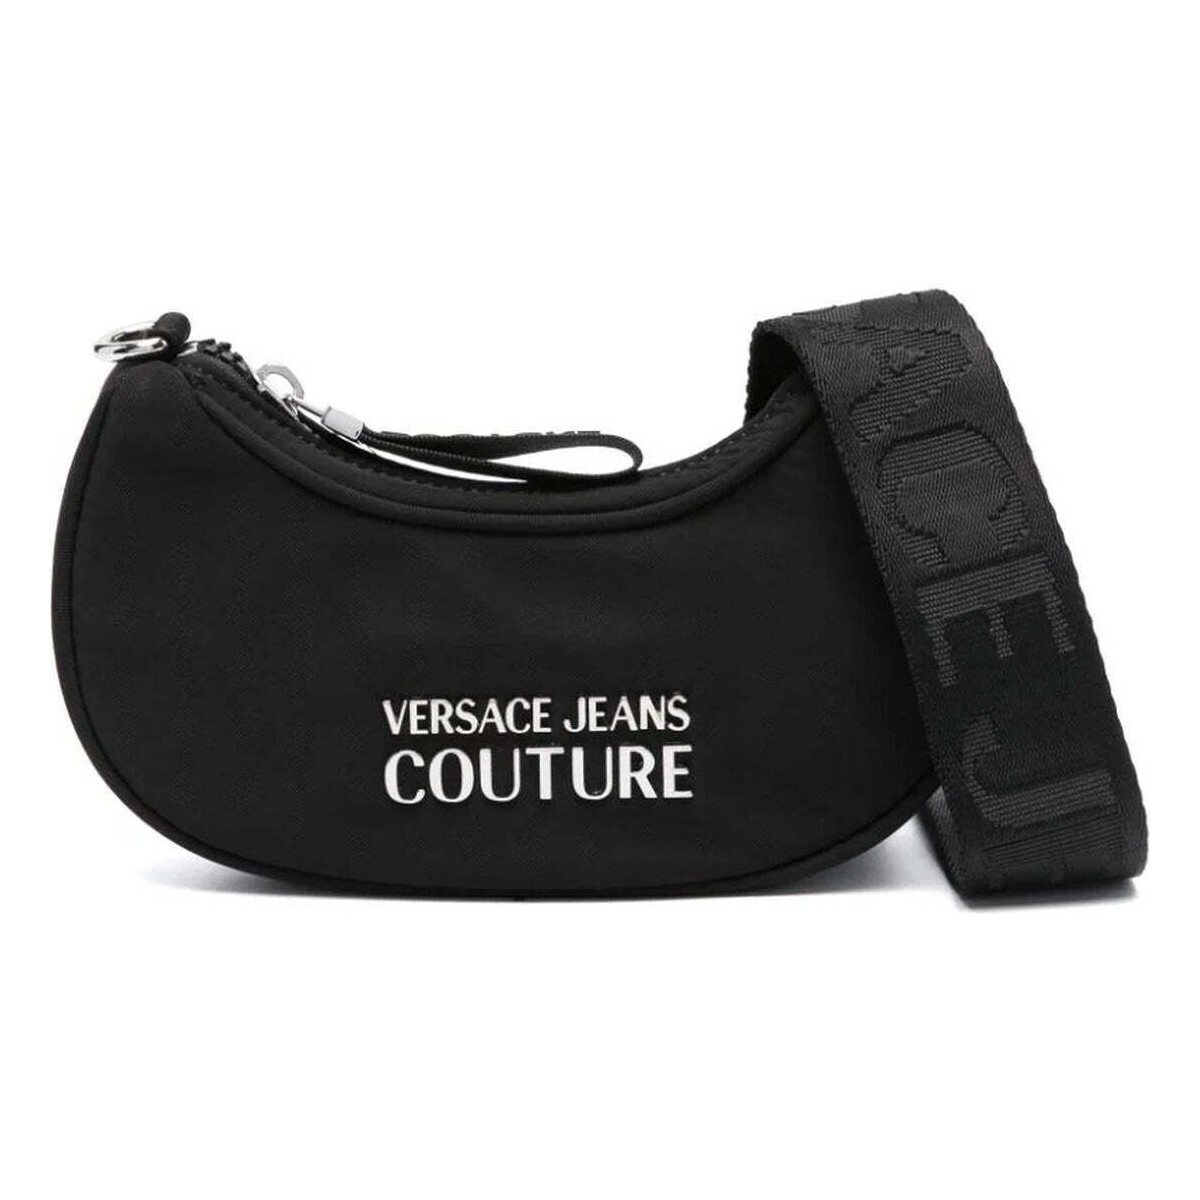 Versace Jeans Couture Noir sporty logo hobo bag N9KRFi9